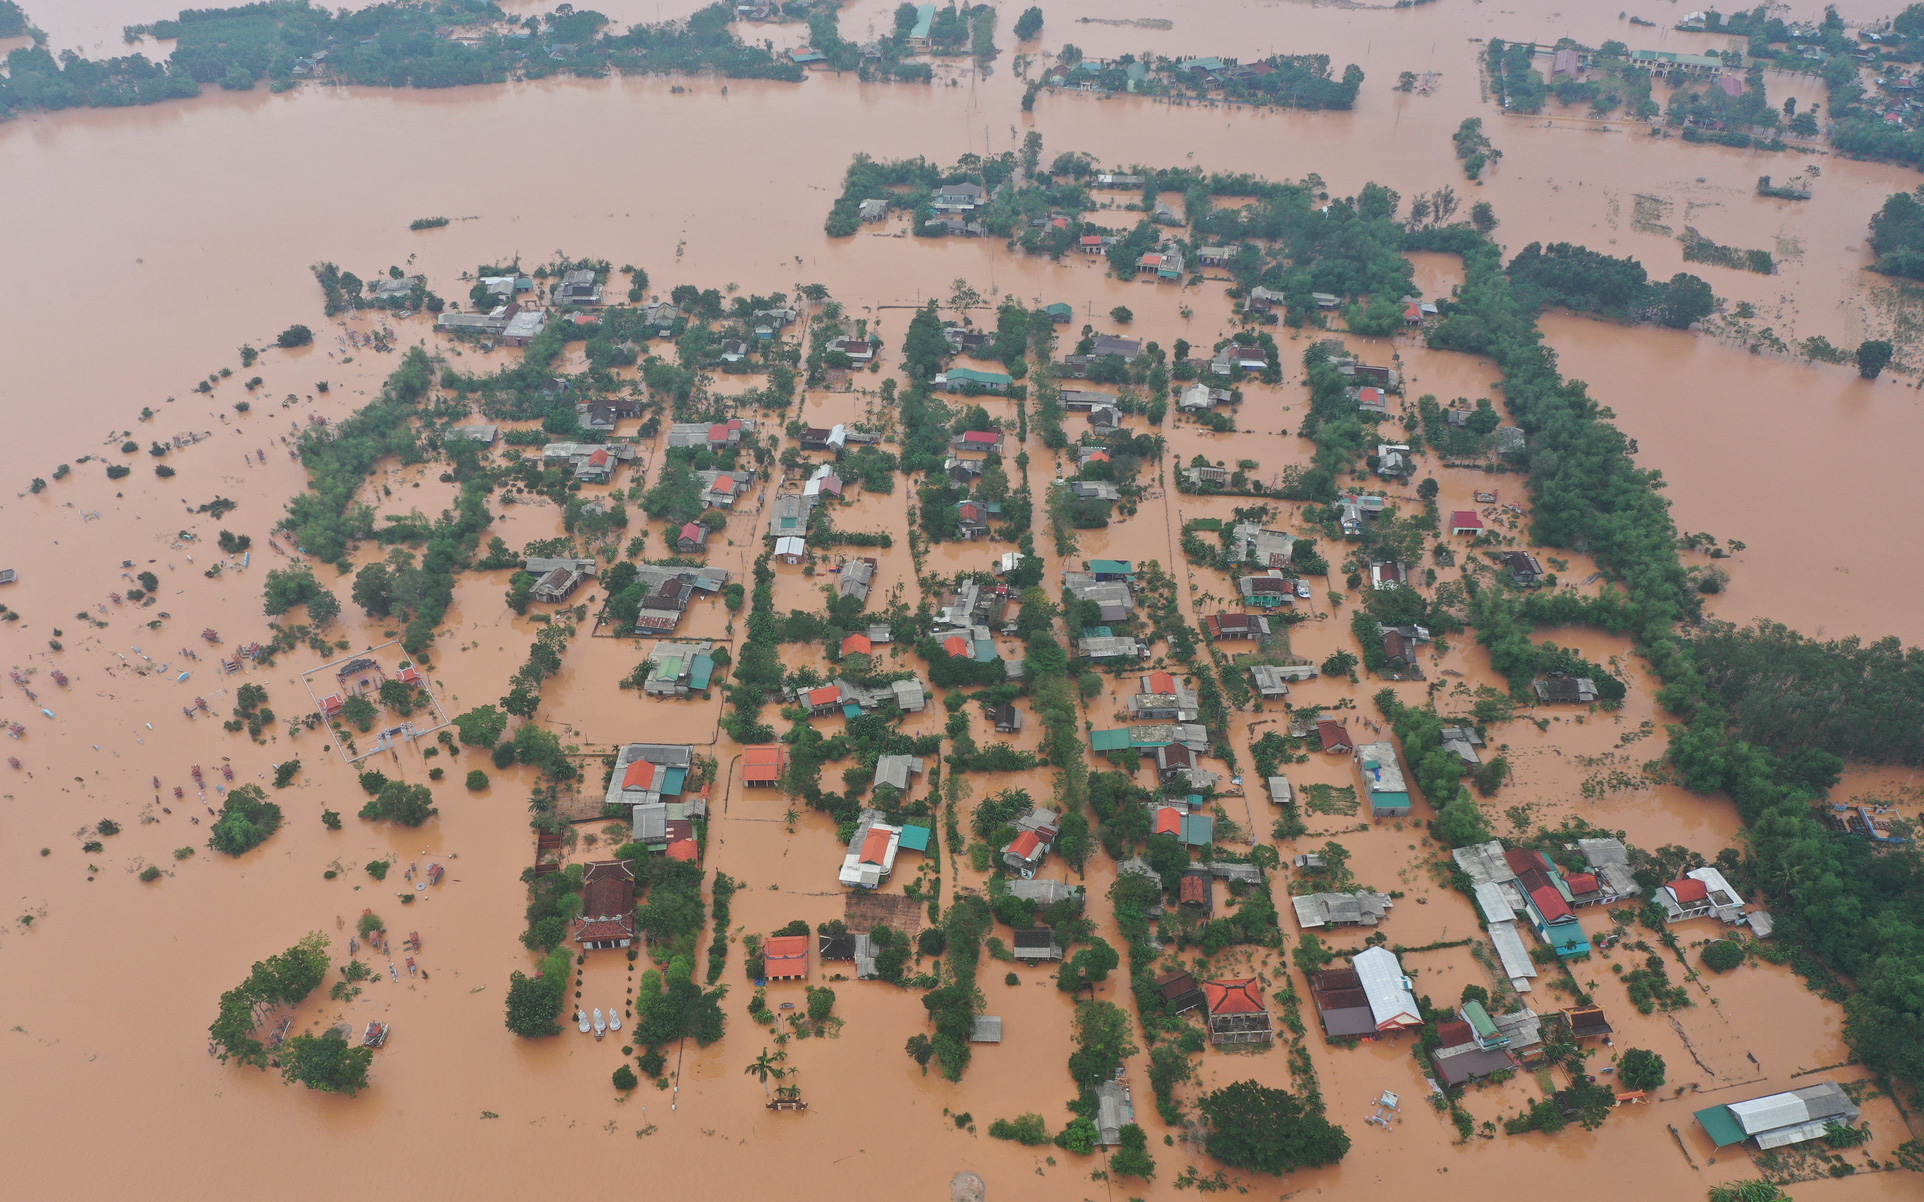 Drone photos show Vietnam's Quang Tri Province under floodwater